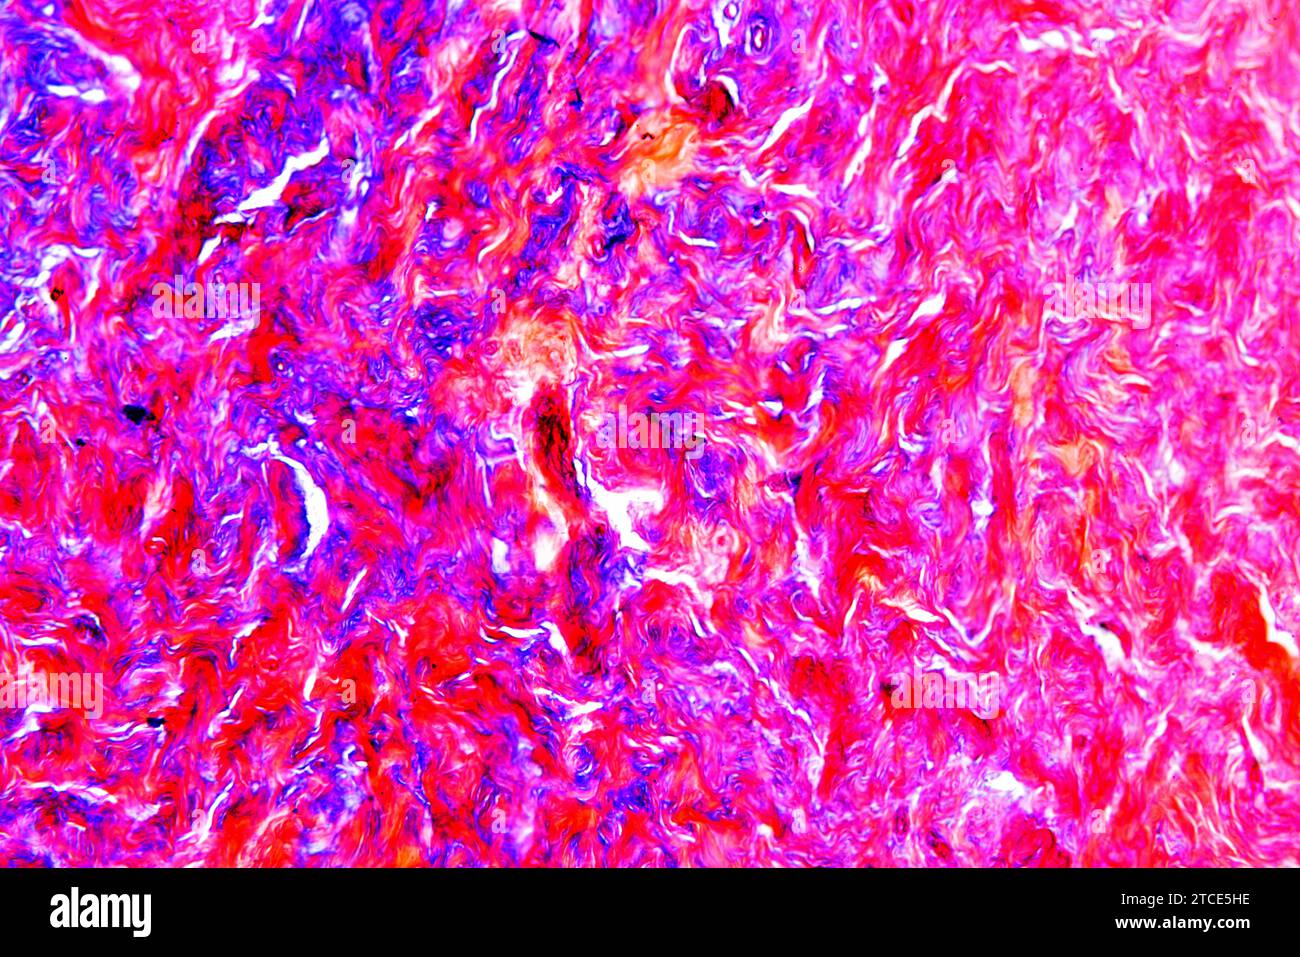 Tissu de fibrocartilage montrant des fibres de collagène. Microscope optique X100. Banque D'Images